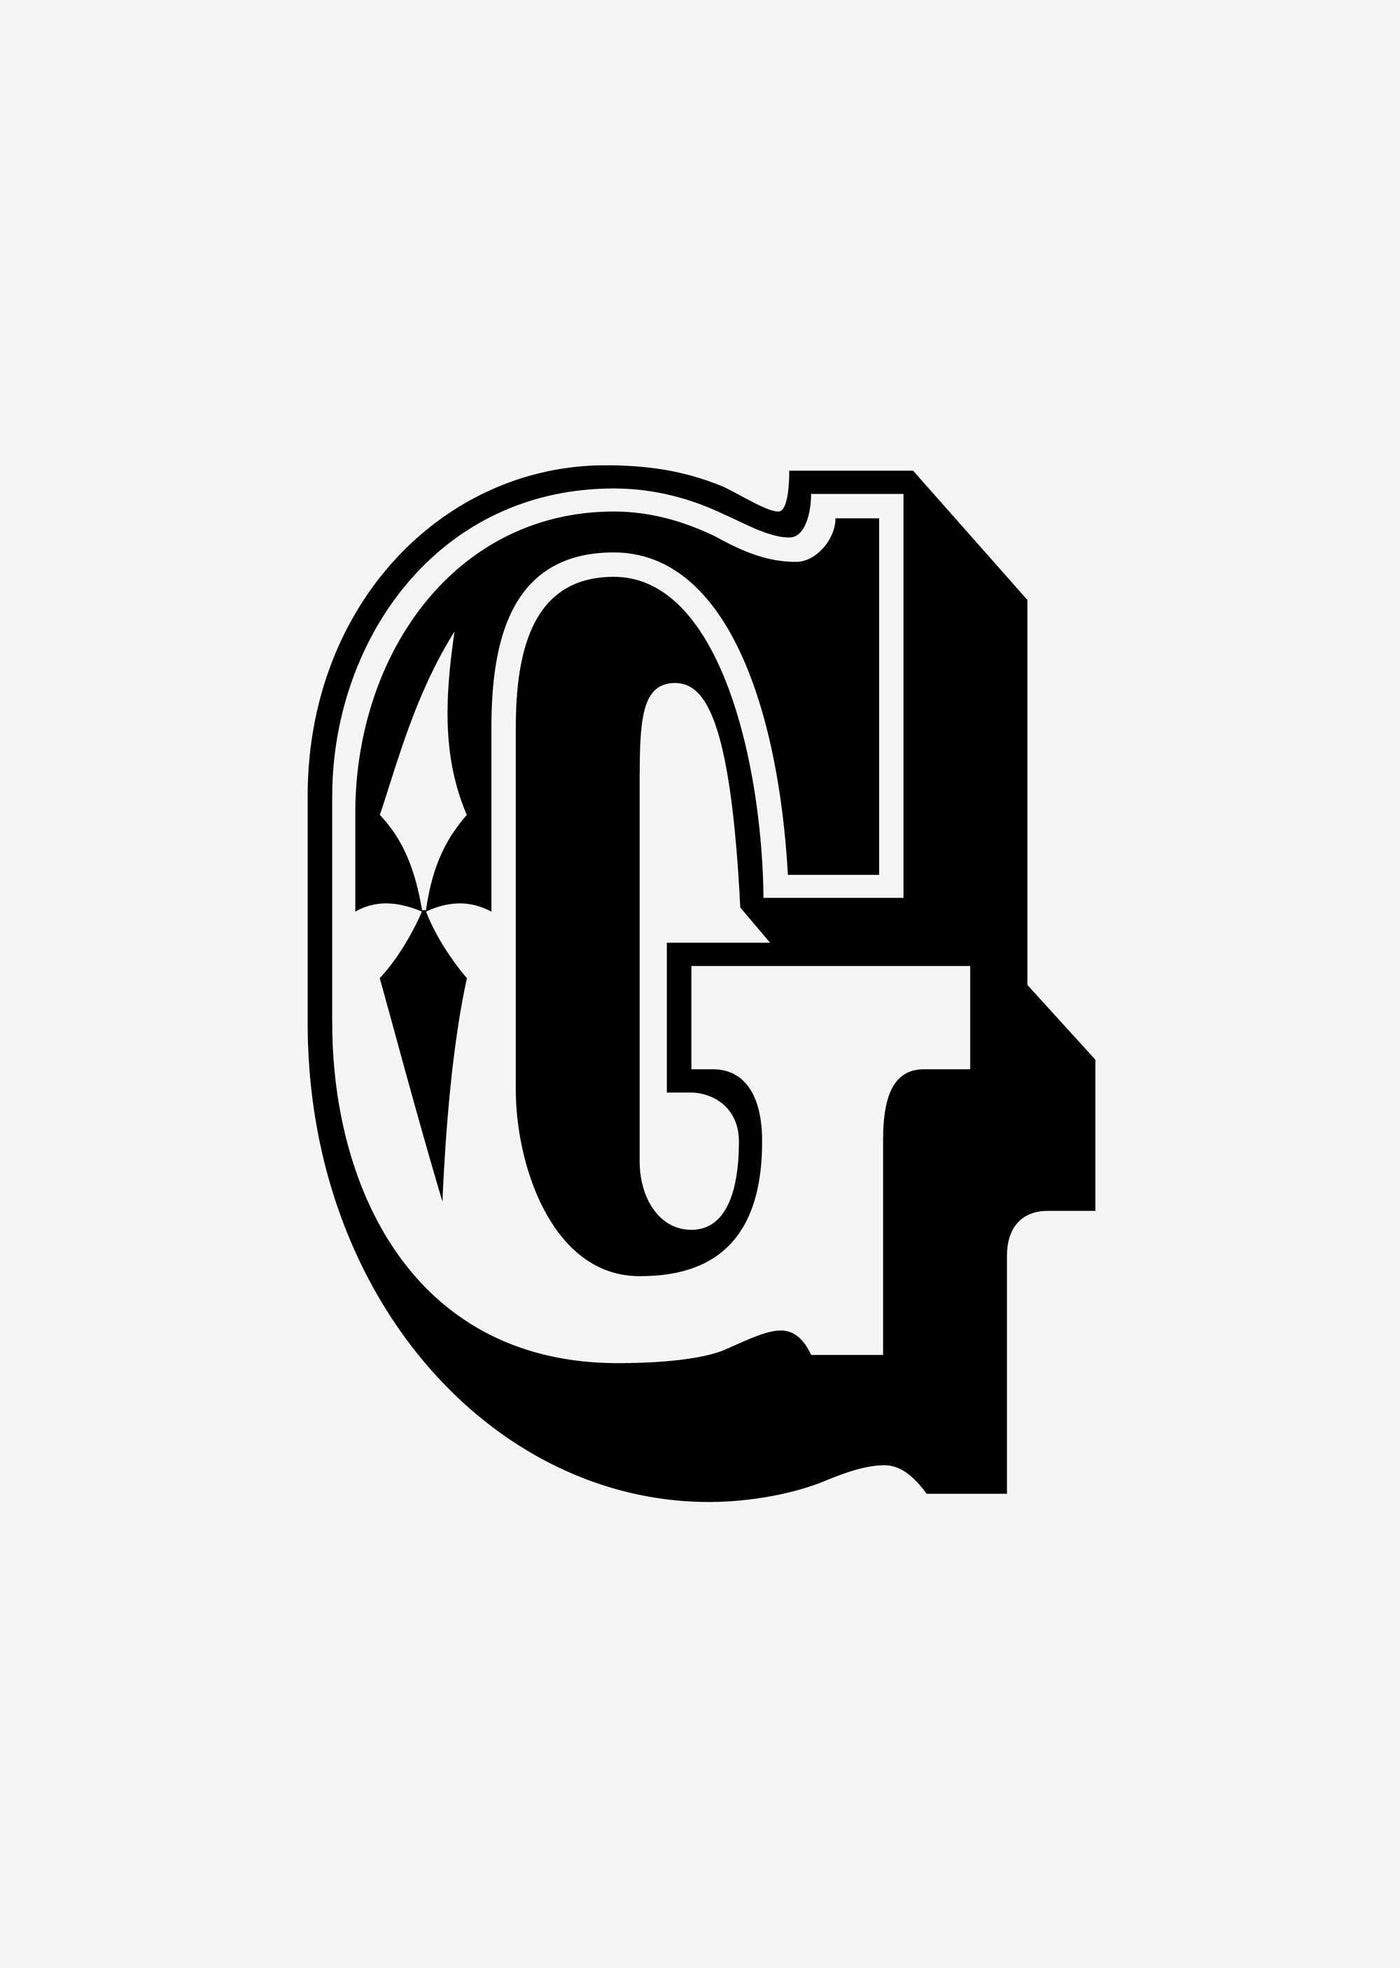 Typographic Wall Art Print 'G'